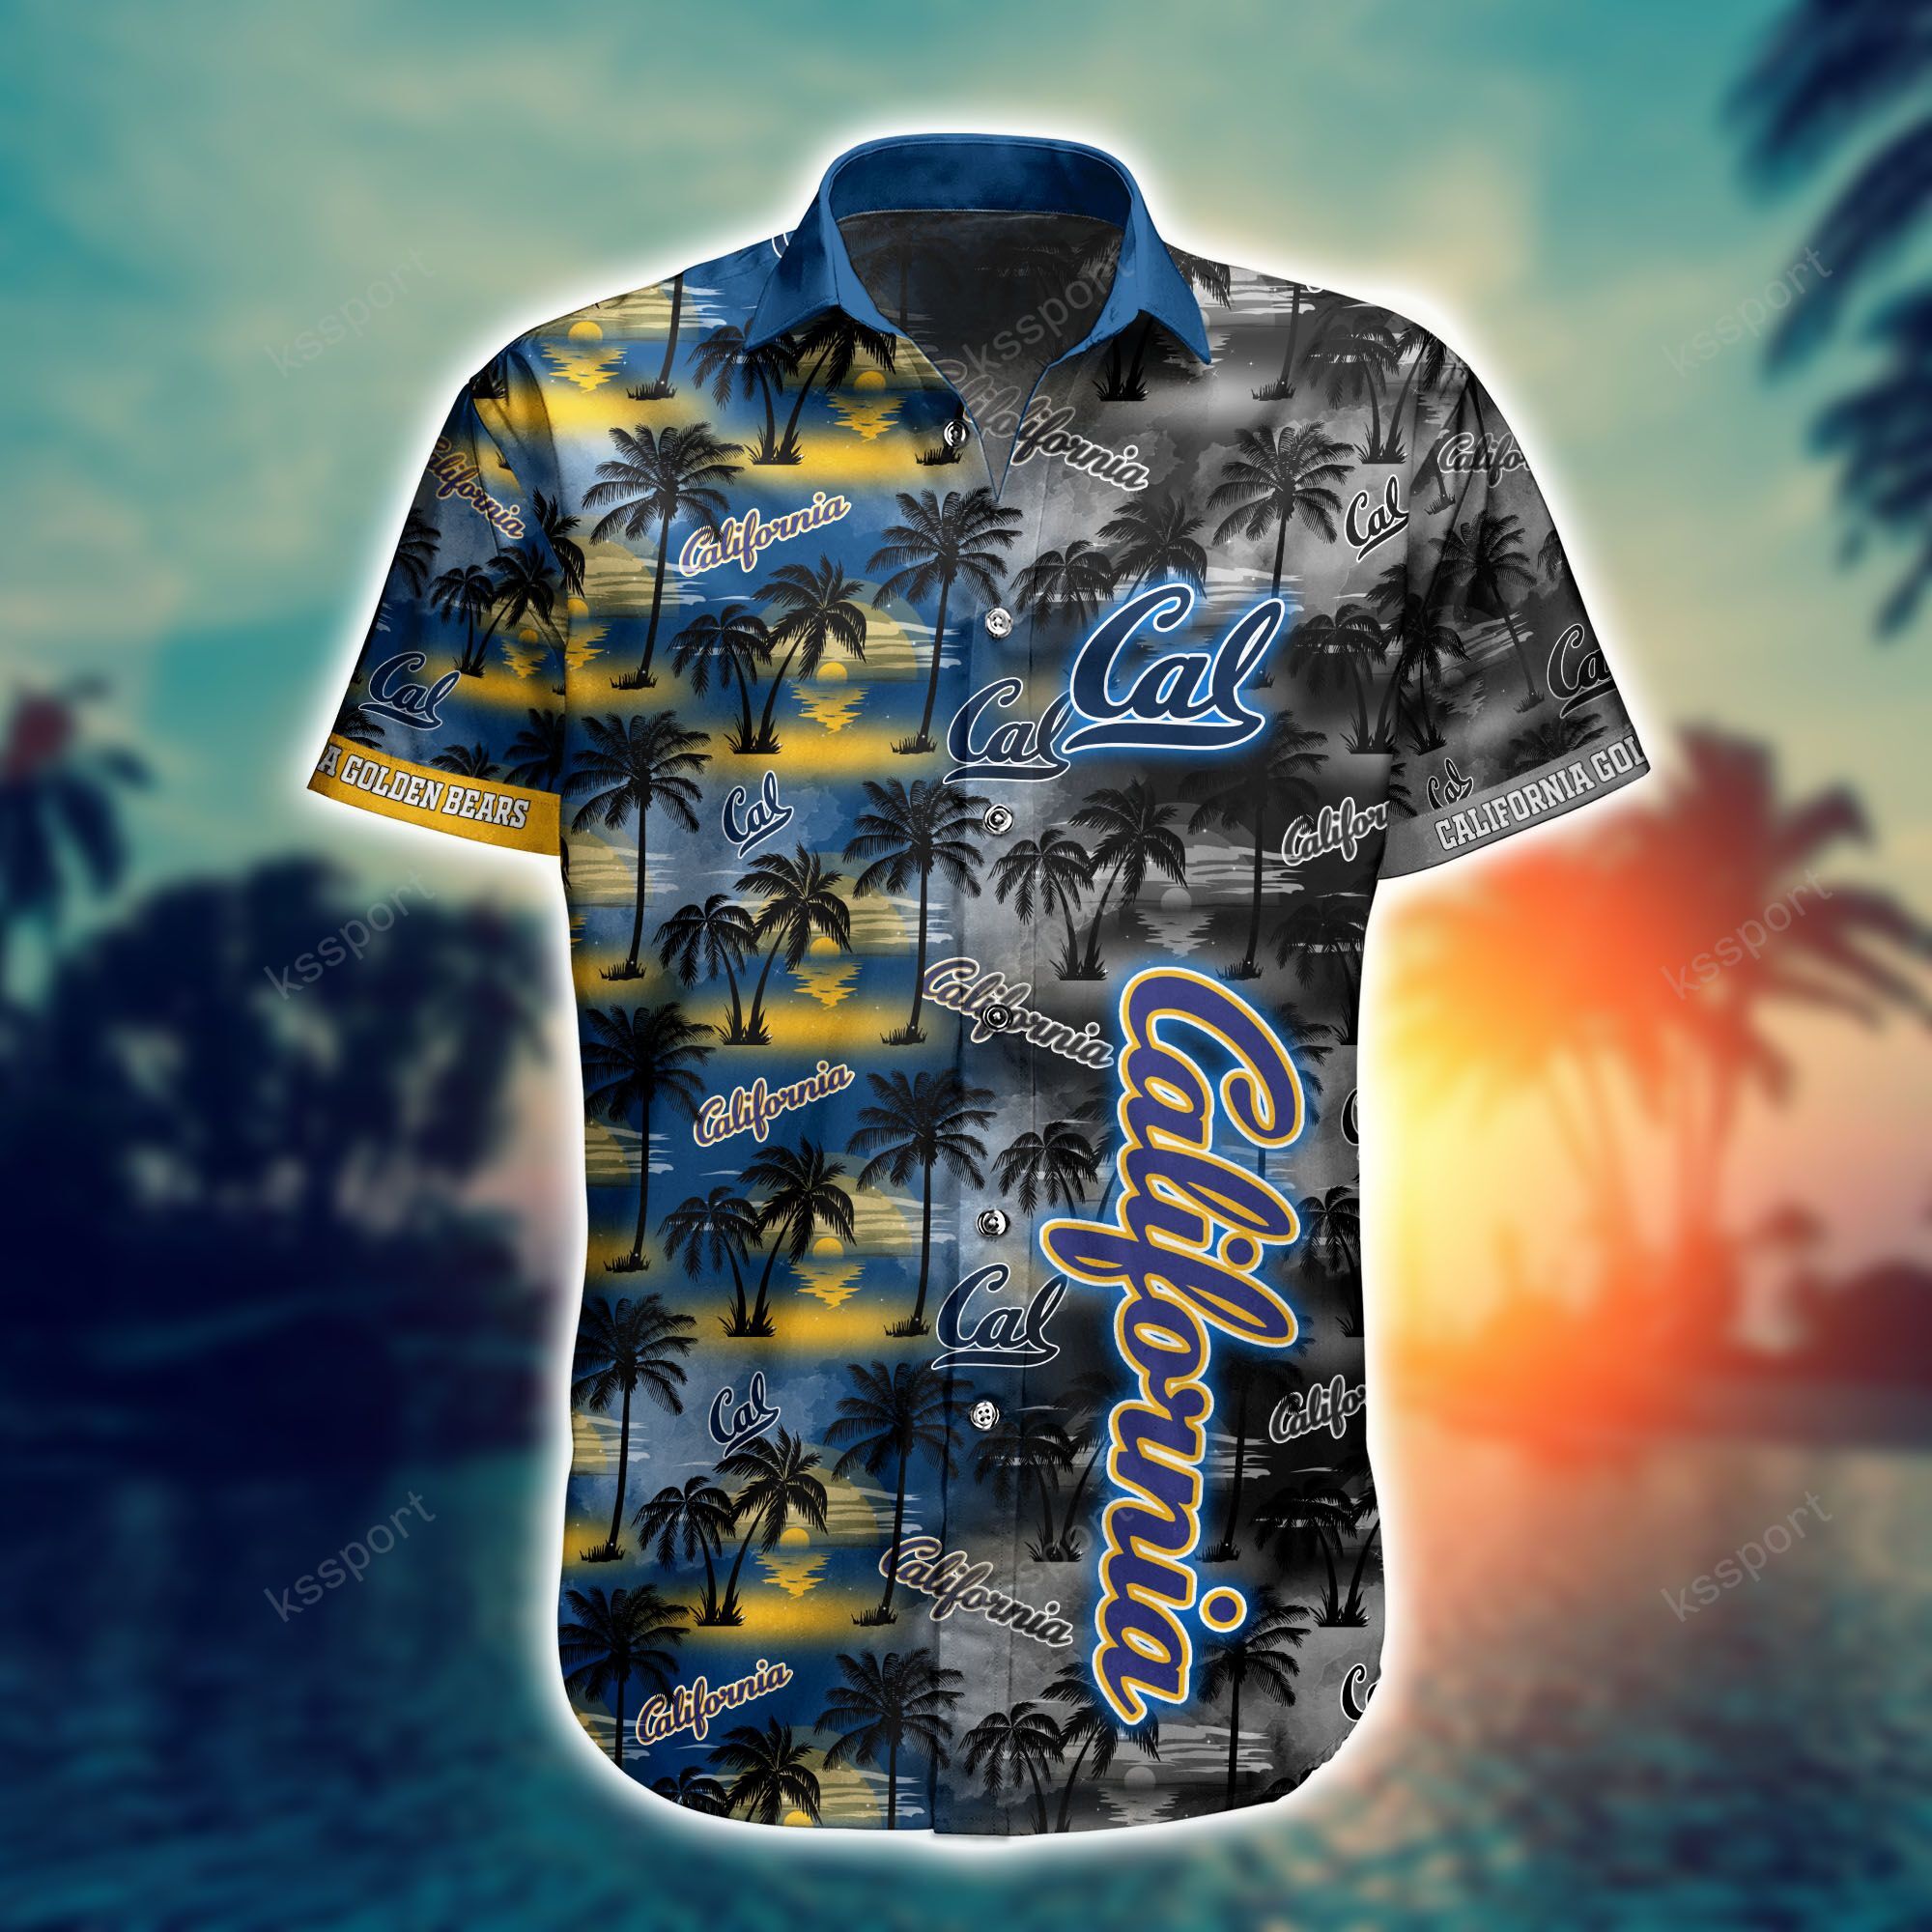 Hawaiian shirt and shorts is a great way to look stylish at a beach party 5